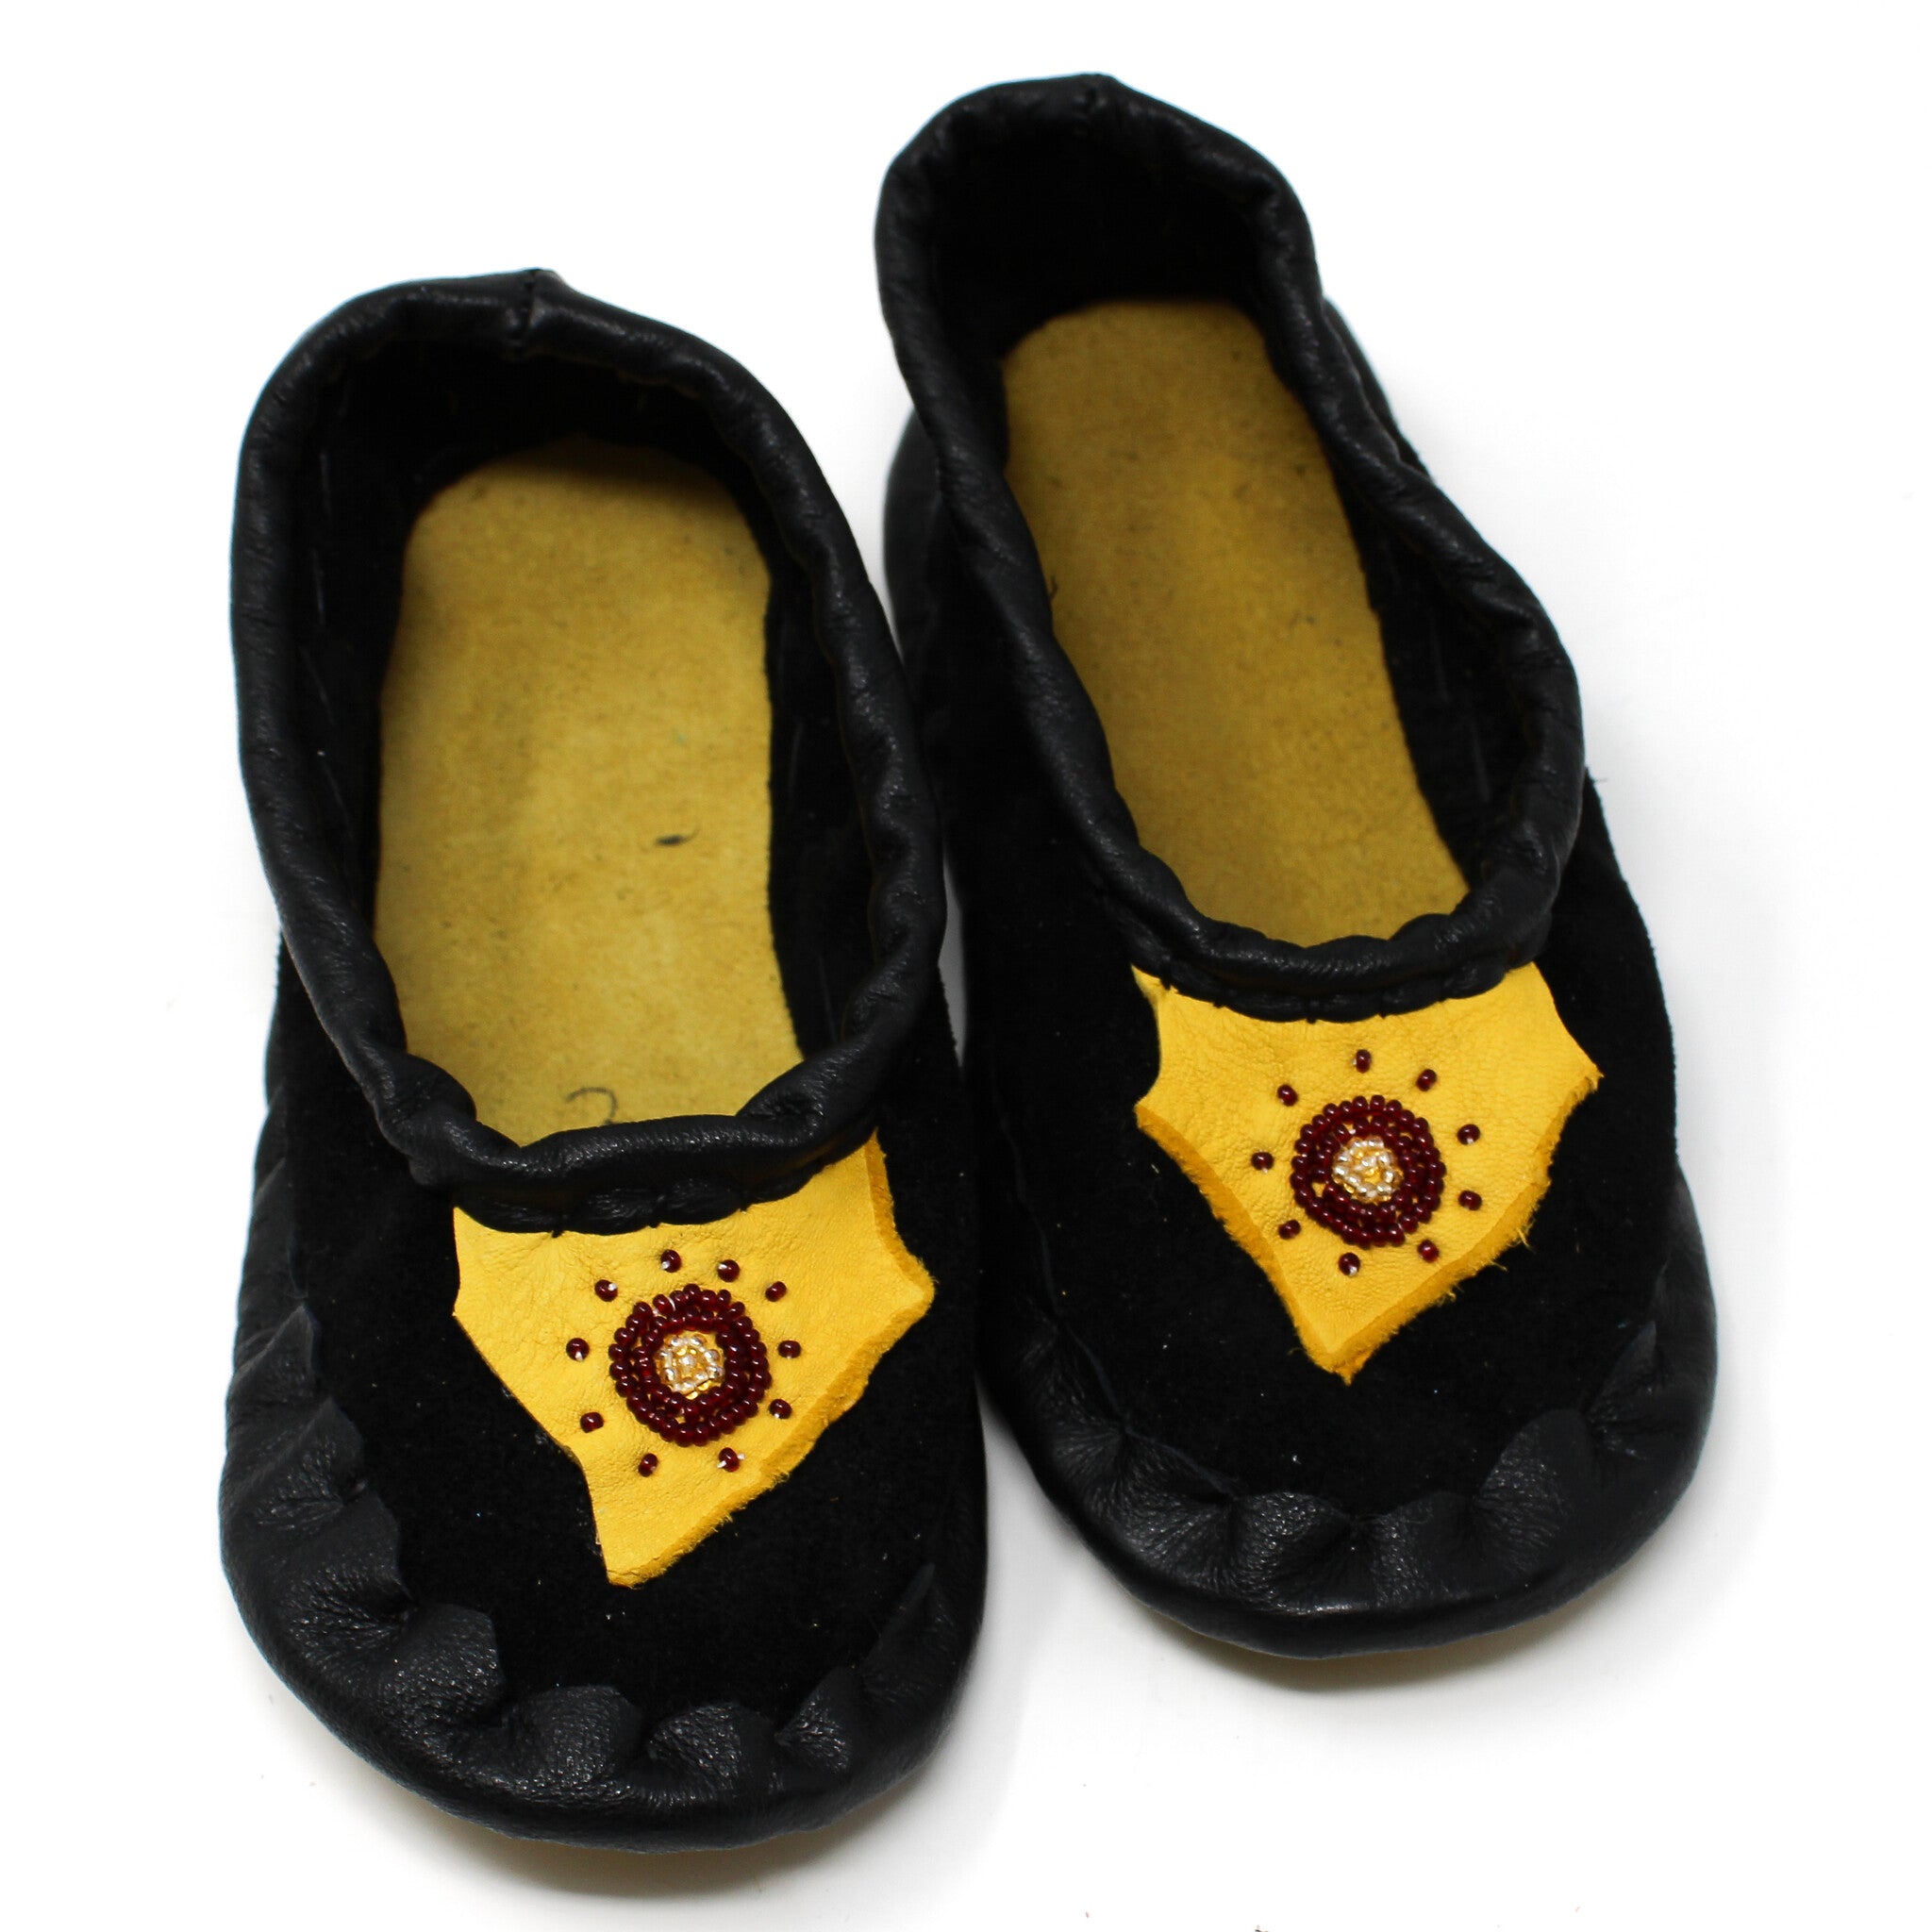 Black and Tan Moccasin slipper